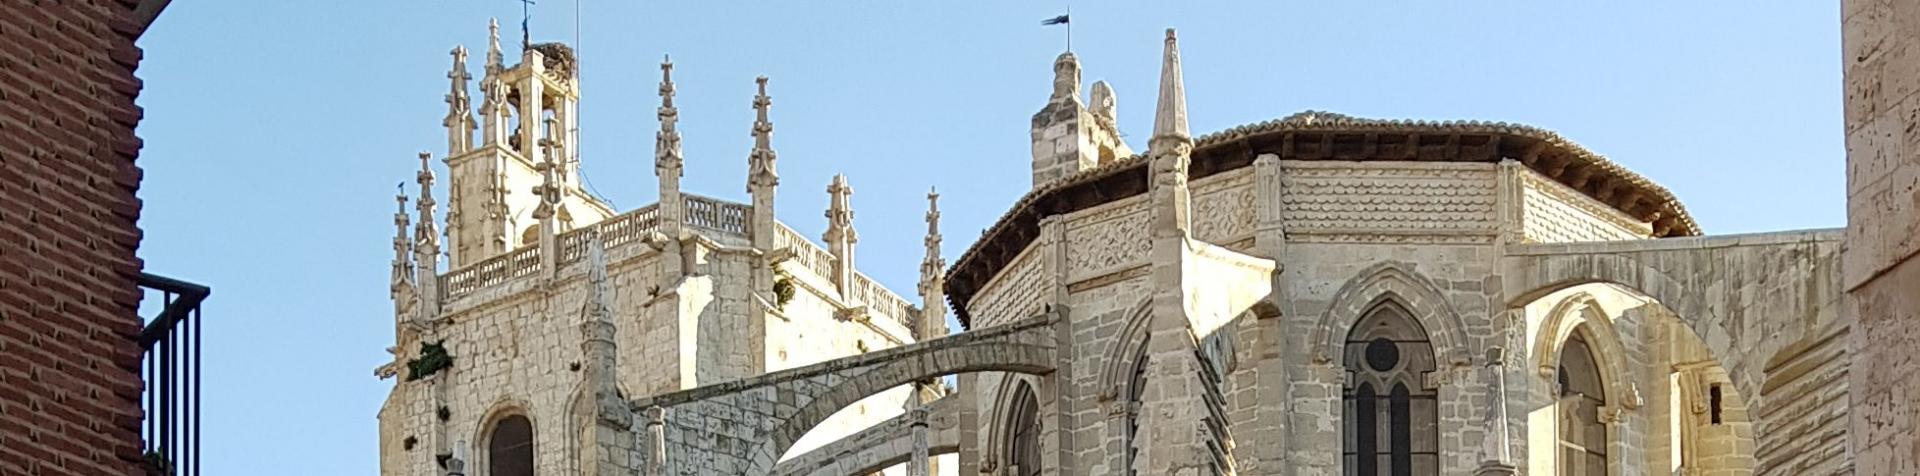 Catedral de San Antolín